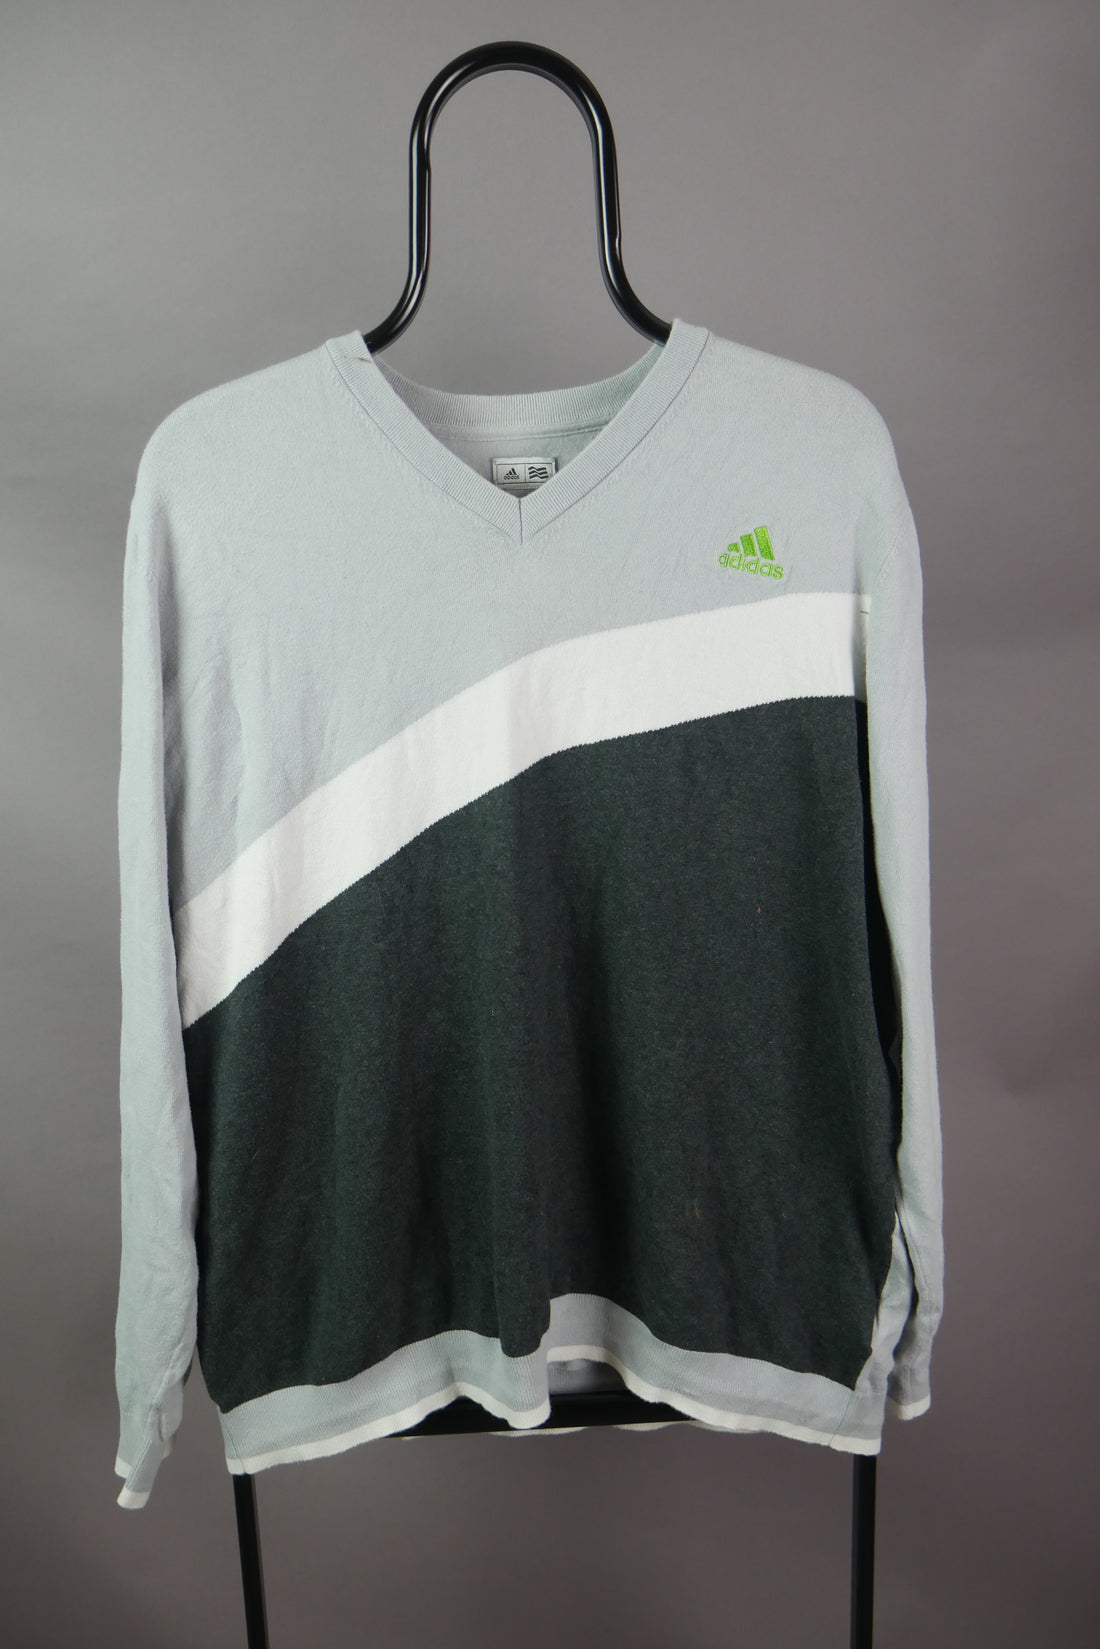 The Adidas Golf V Neck Sweatshirt (XXL)